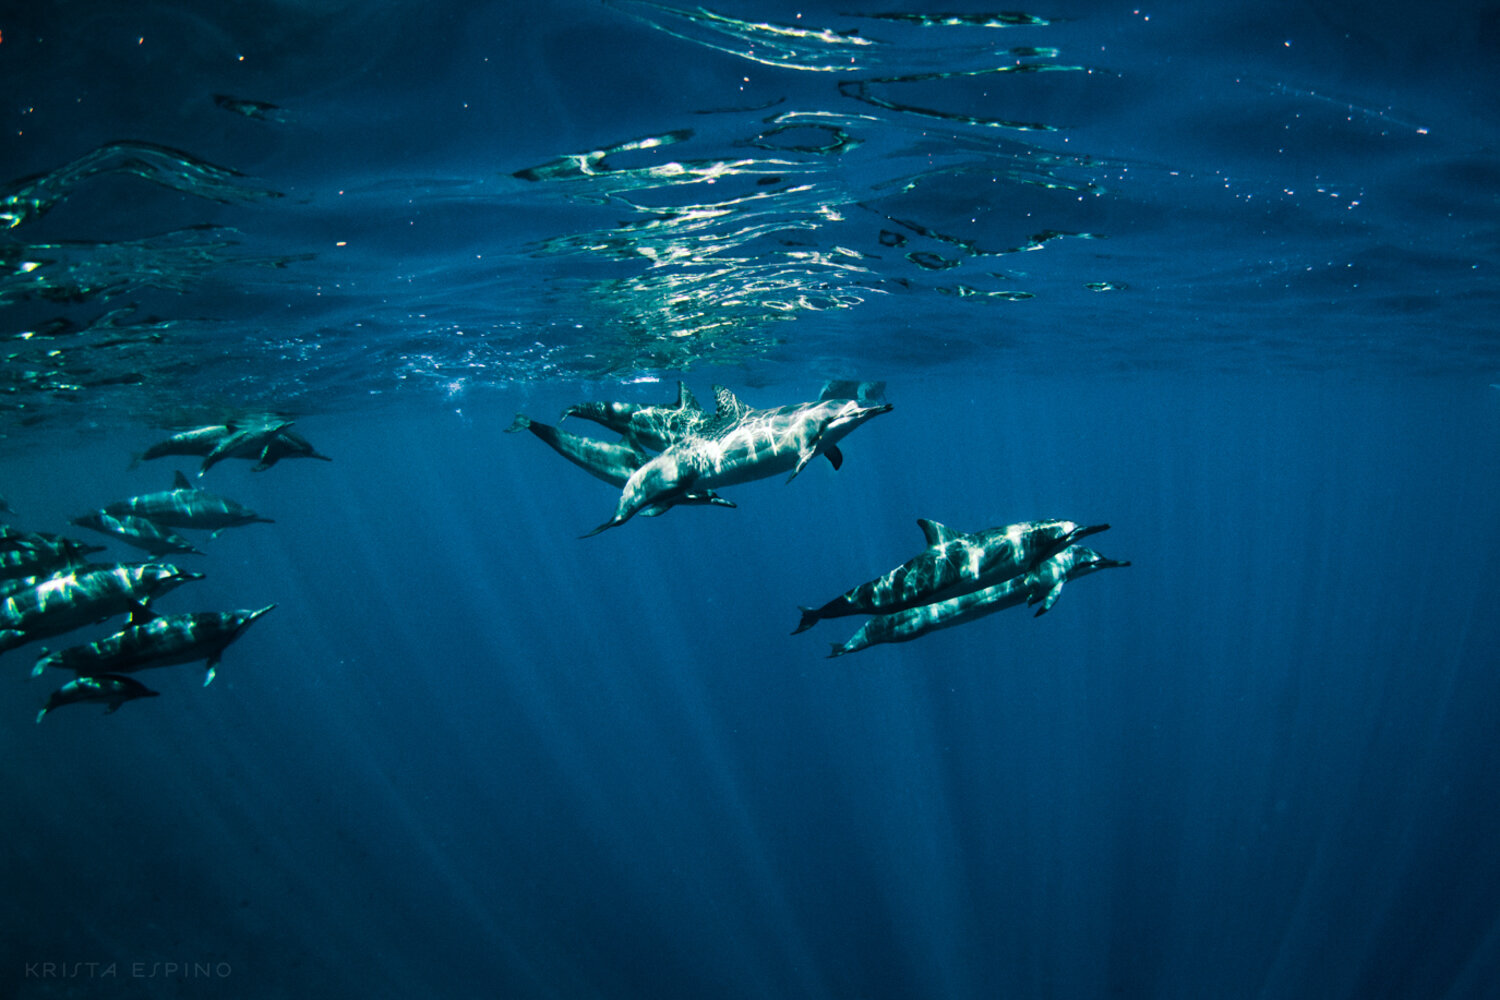 dolphin eco tour wild wildlife sealife lifestyle nature photography photographer krista espino travel underwater swim ocean big island hawaii kona dolphins_-11.jpg